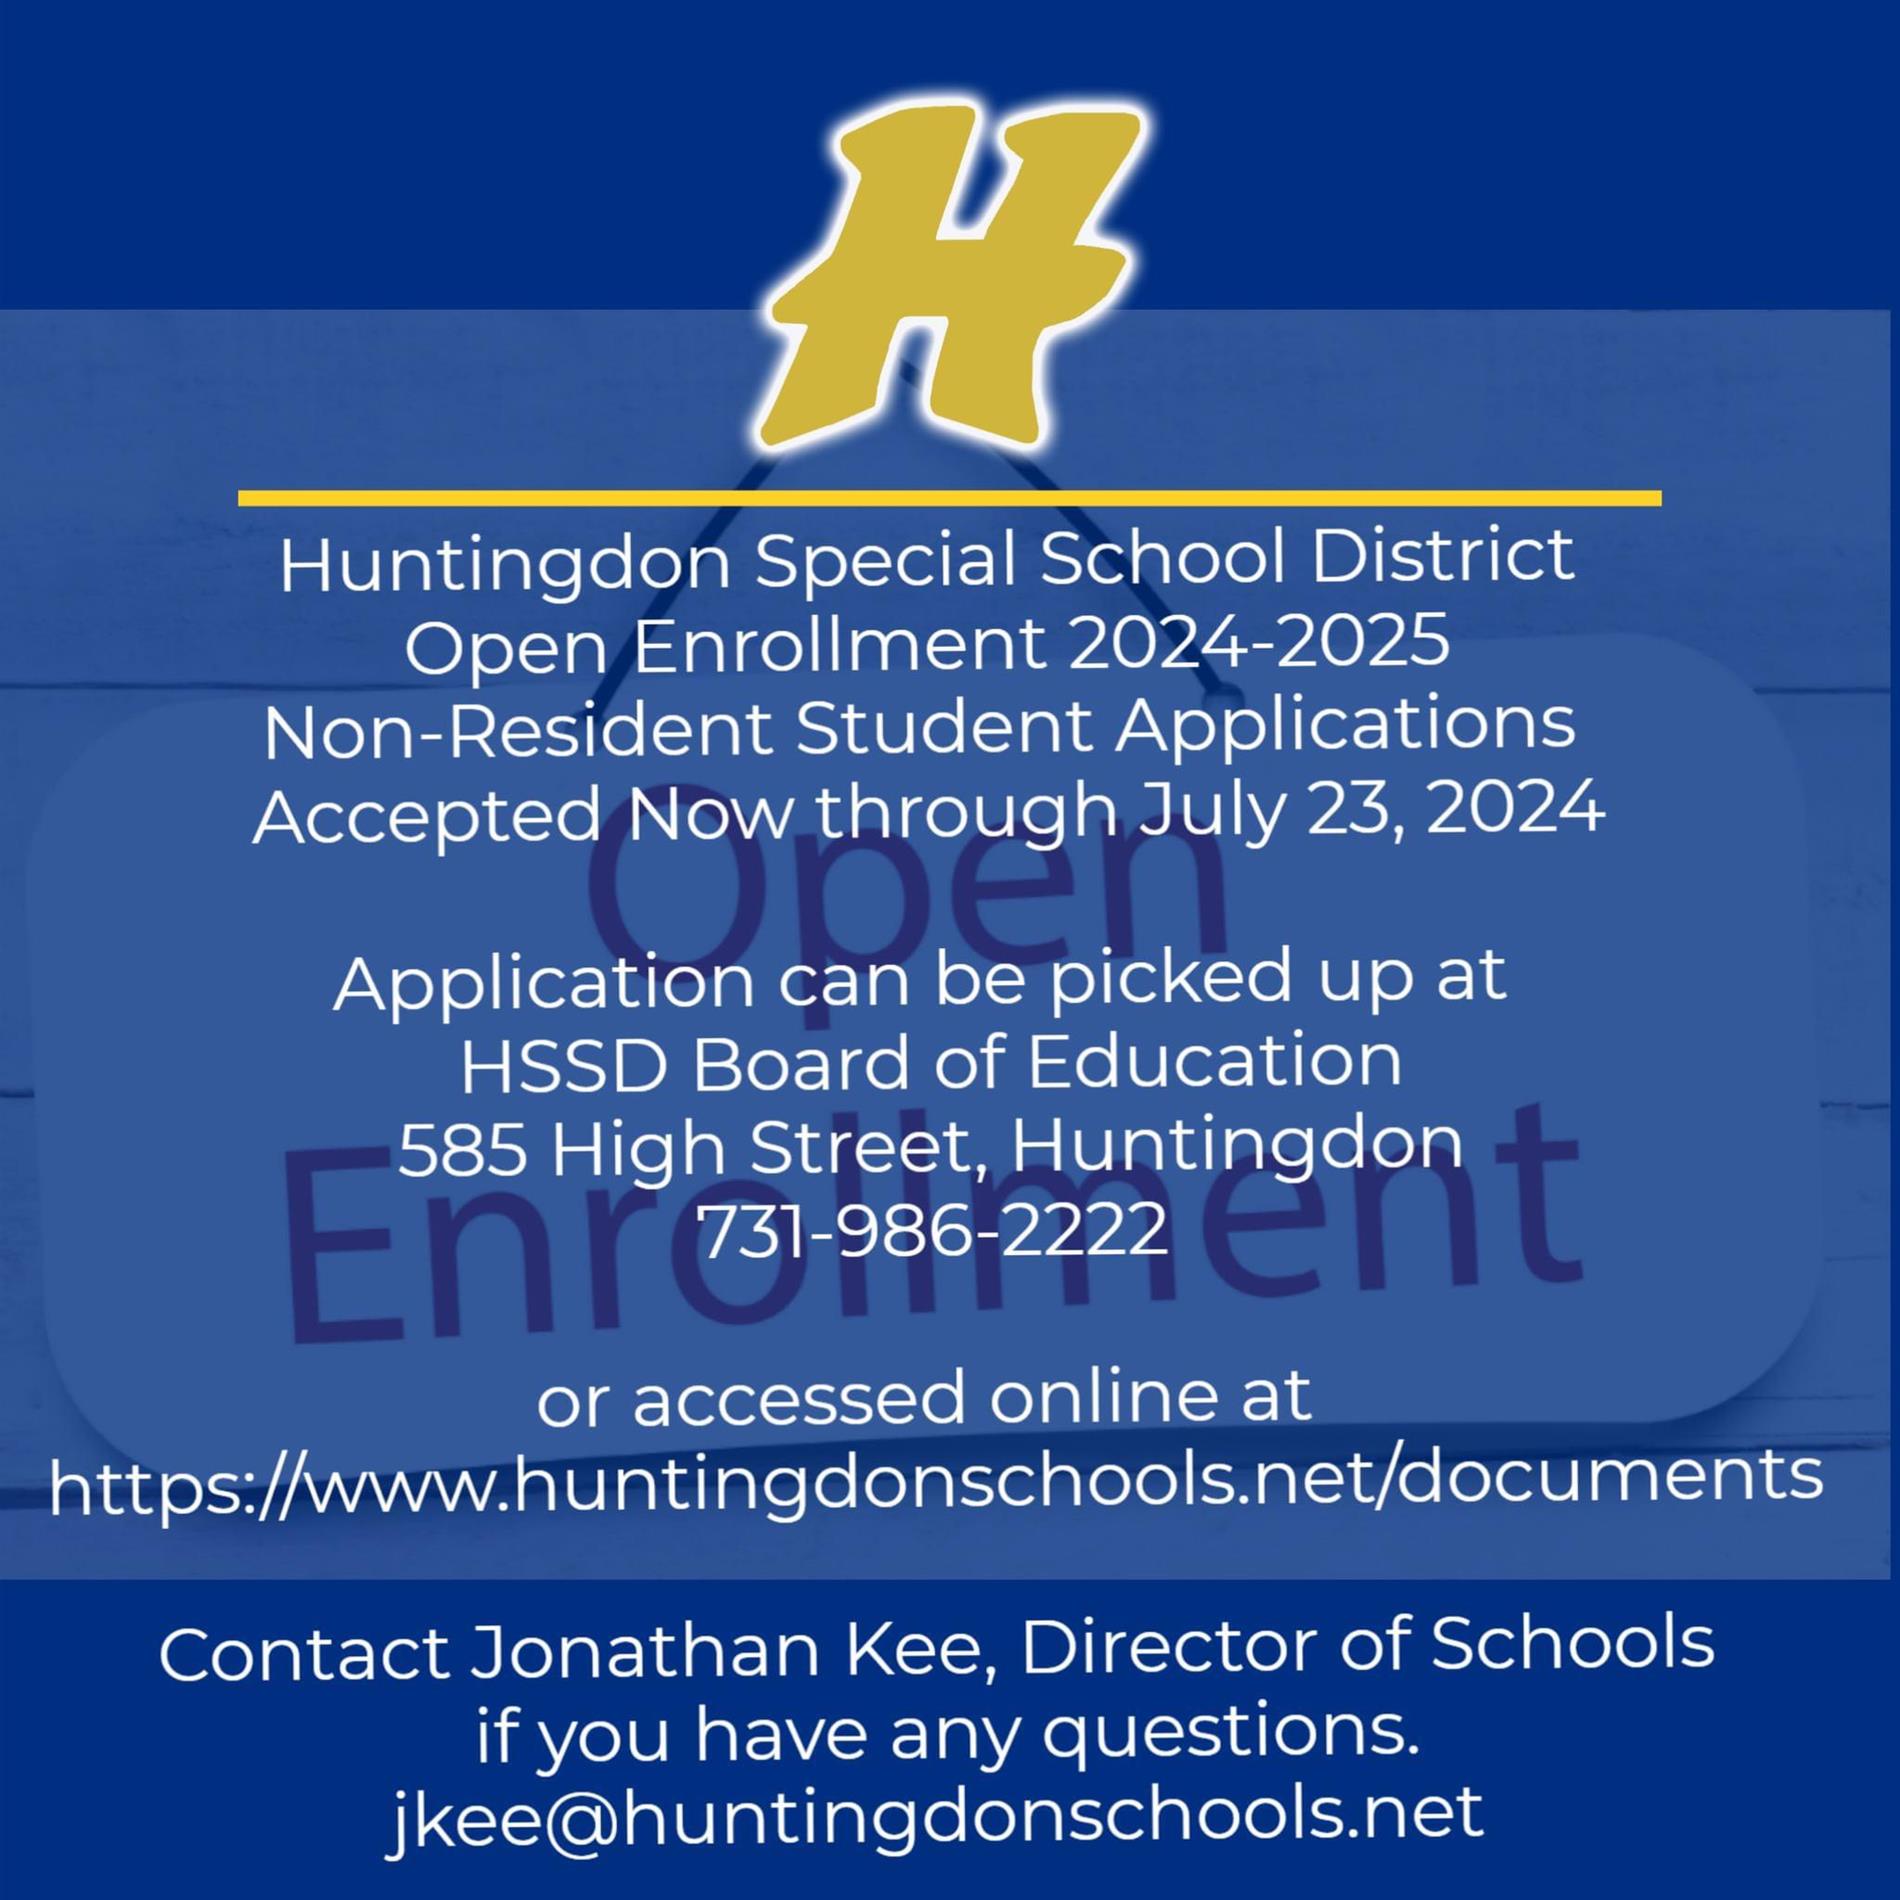 Open Enrollment Information